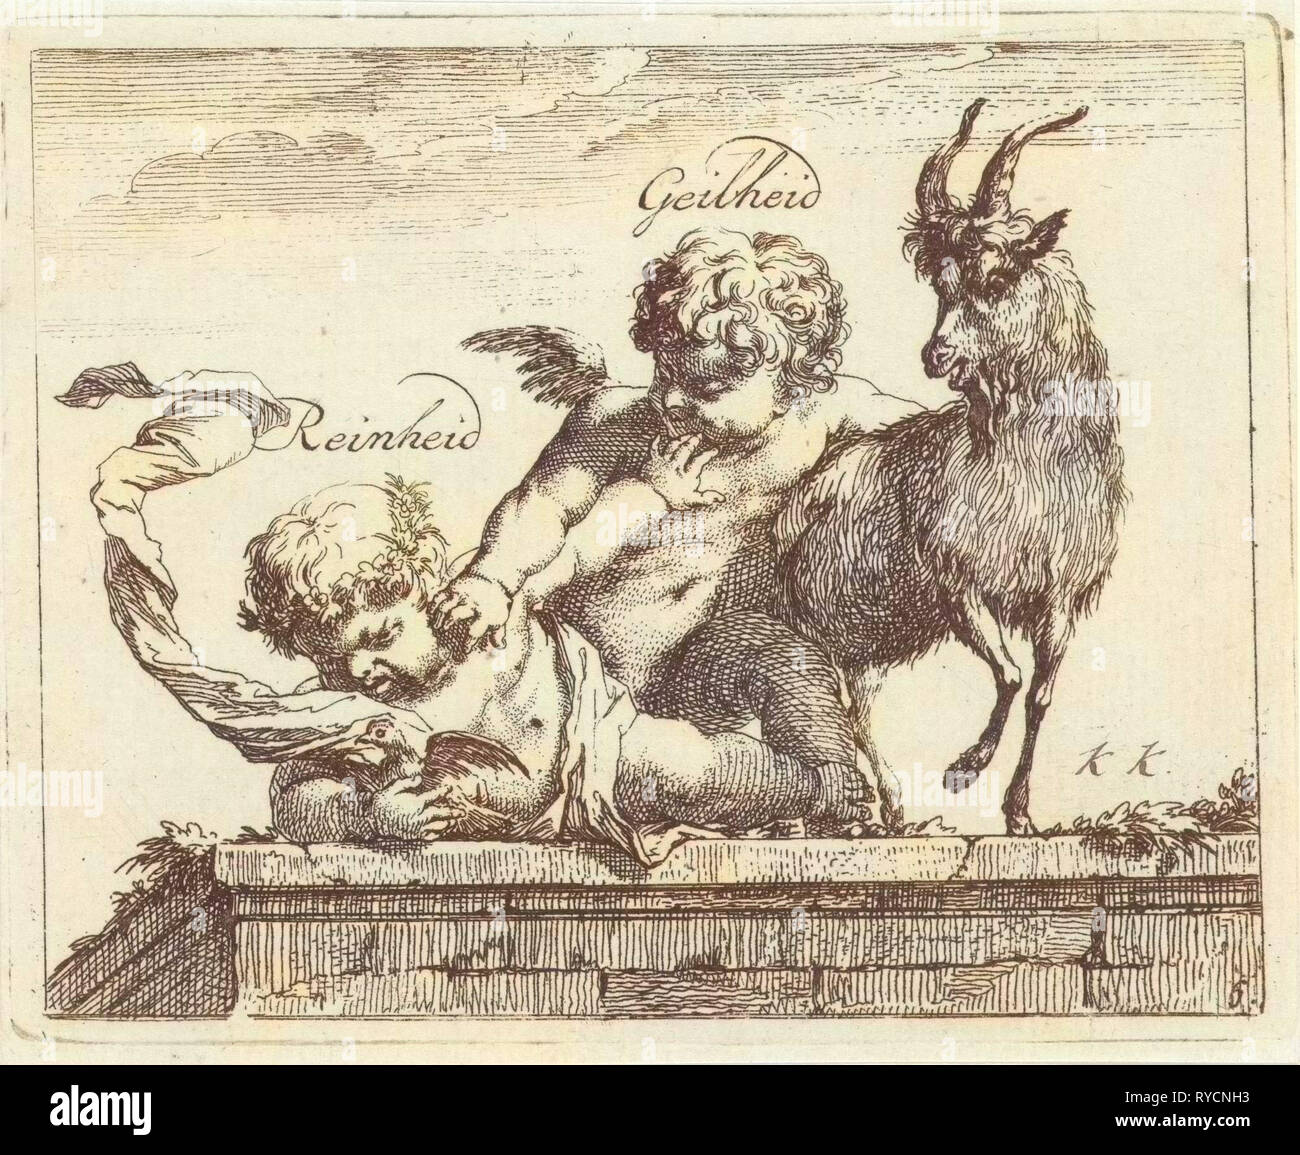 Battle between Purity and horniness, Arnold Houbraken, 1710 - 1719 Stock Photo